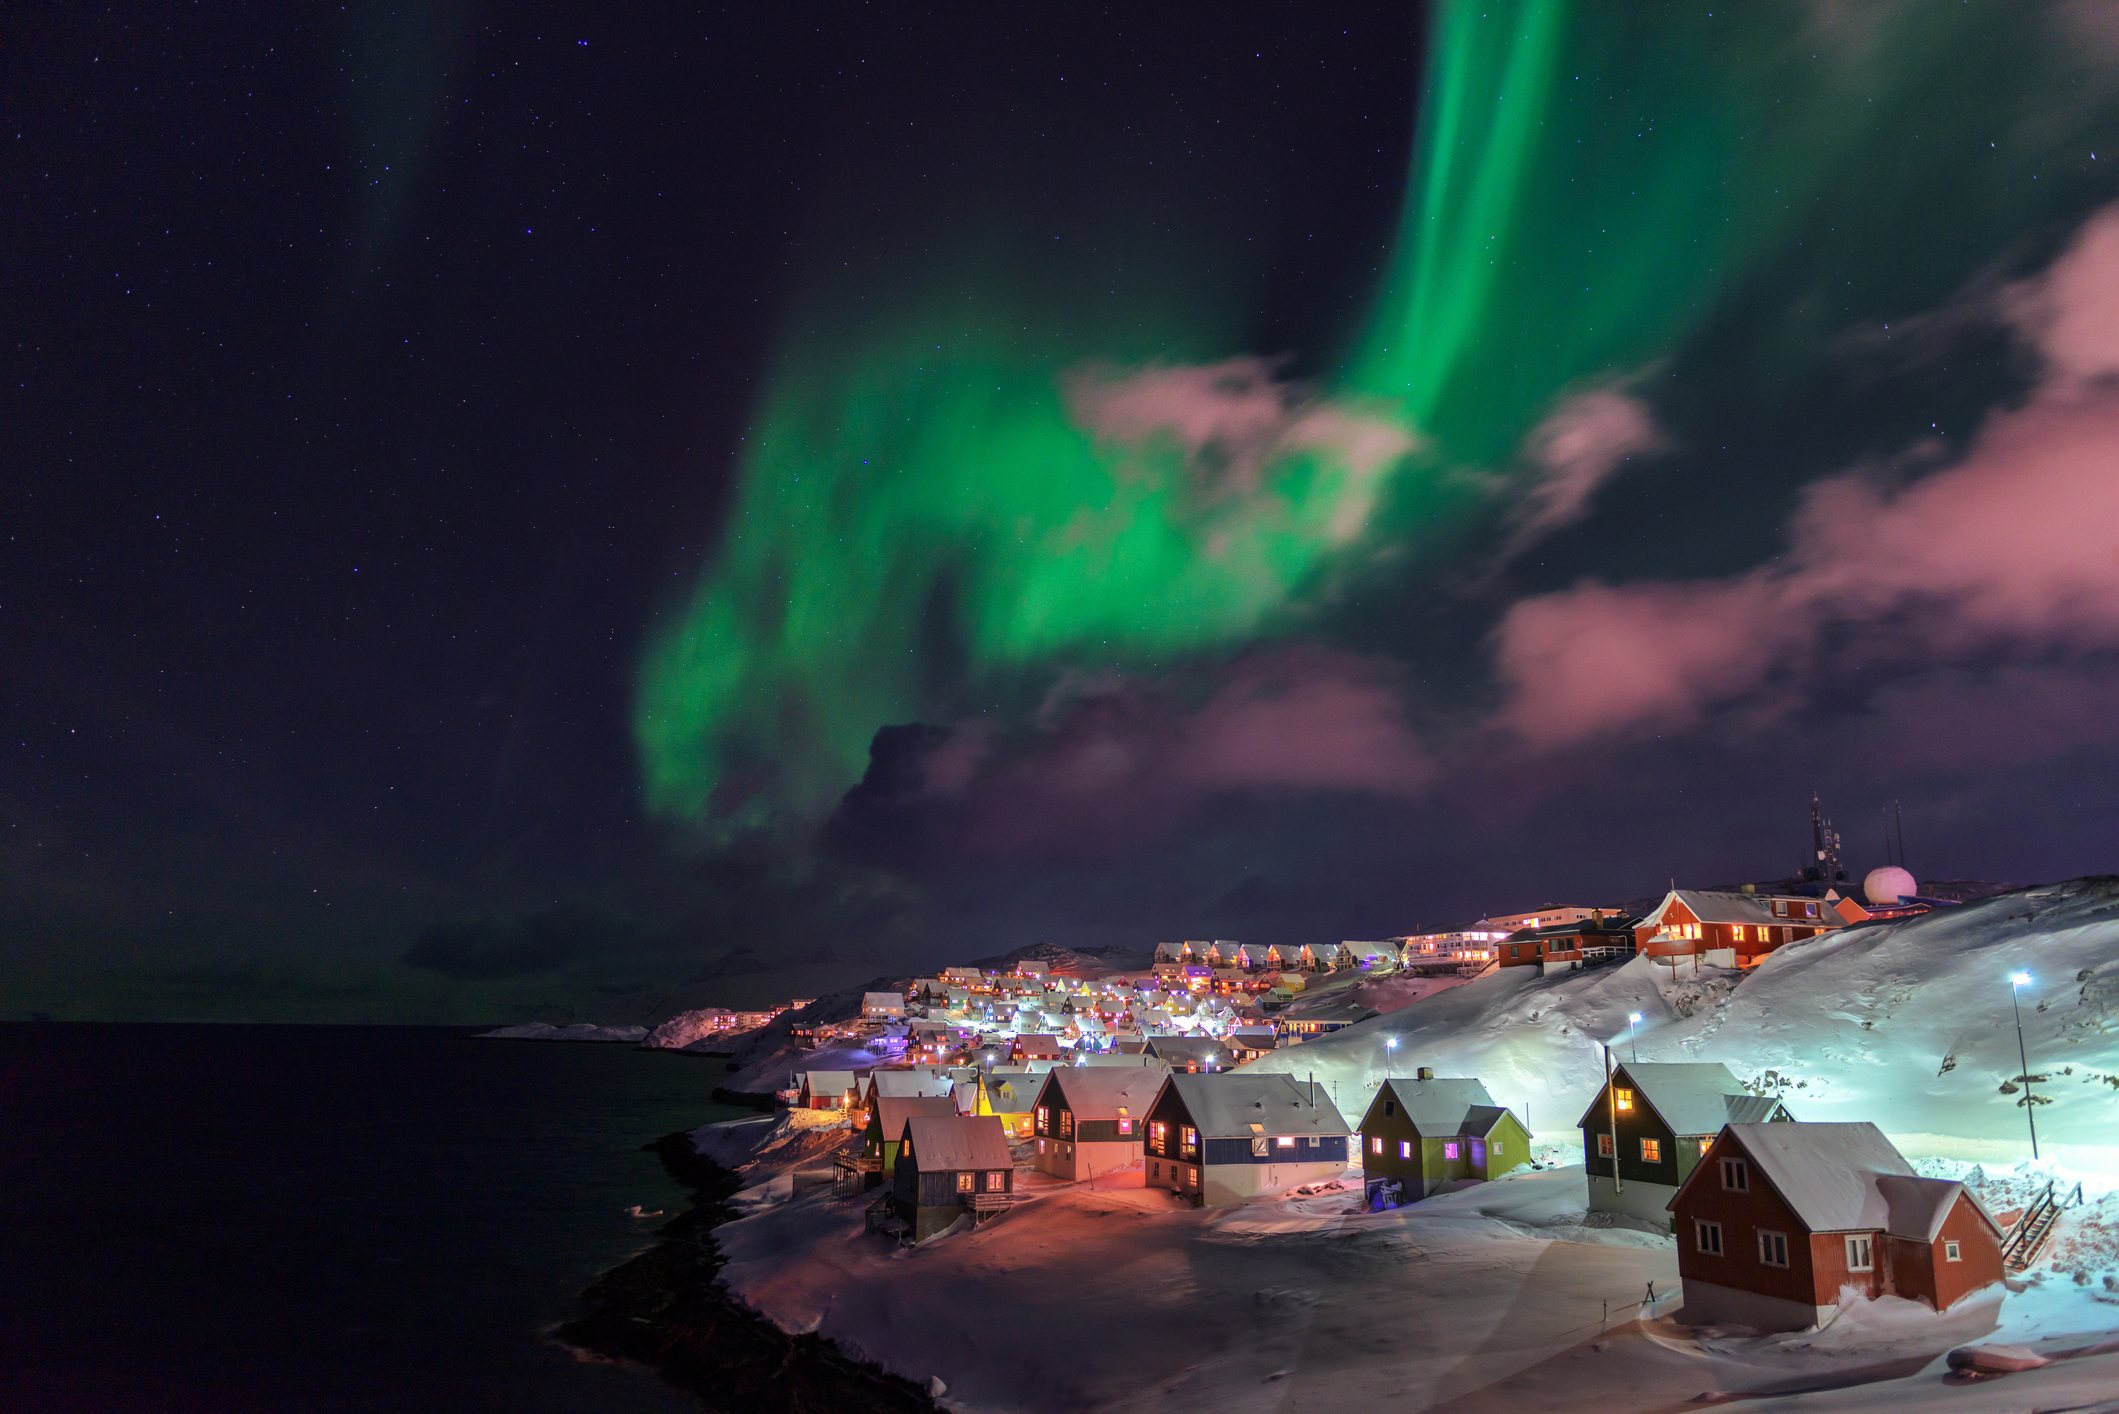 Location: Greenland. Photo Credit: Carlo Lukassen/Getty Images